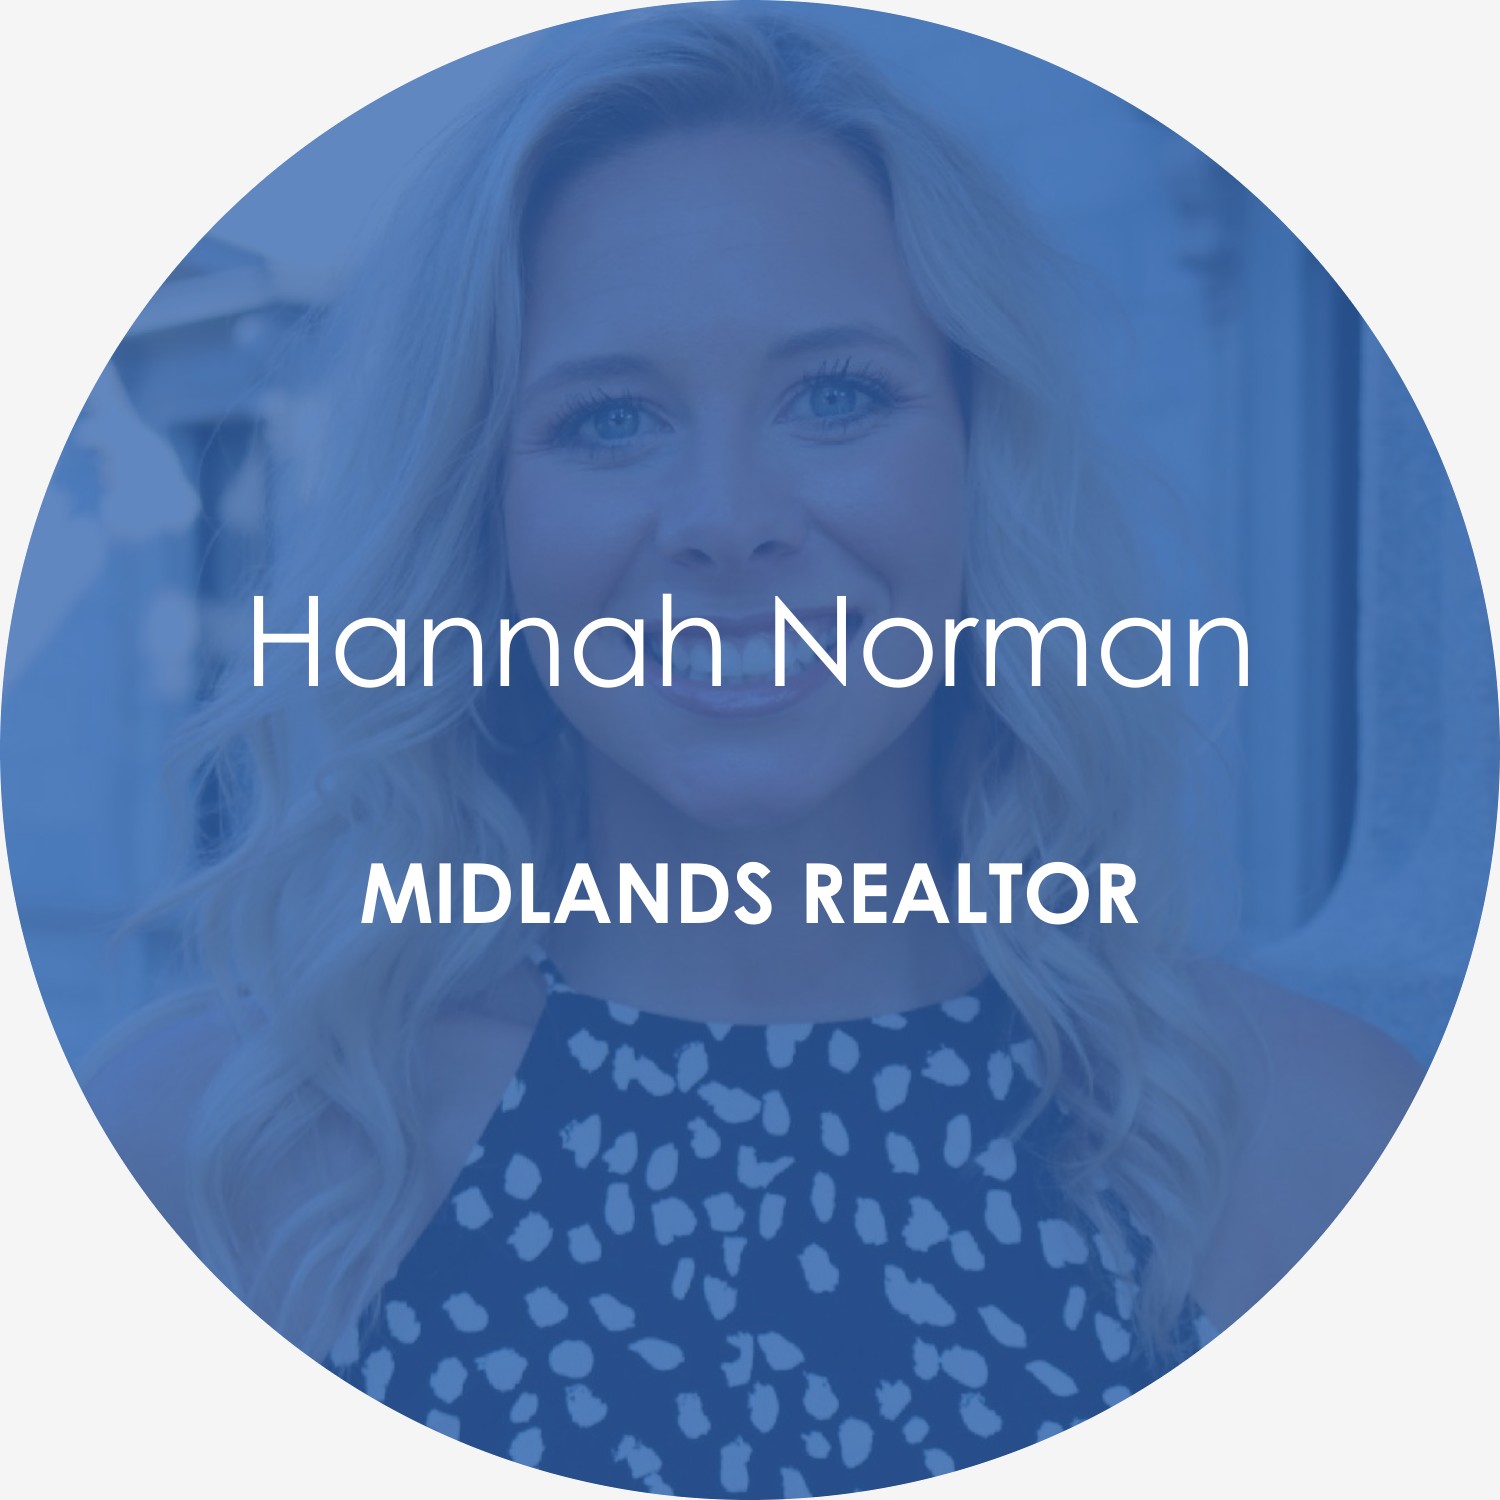 Hannah Norman – Midlands realtor